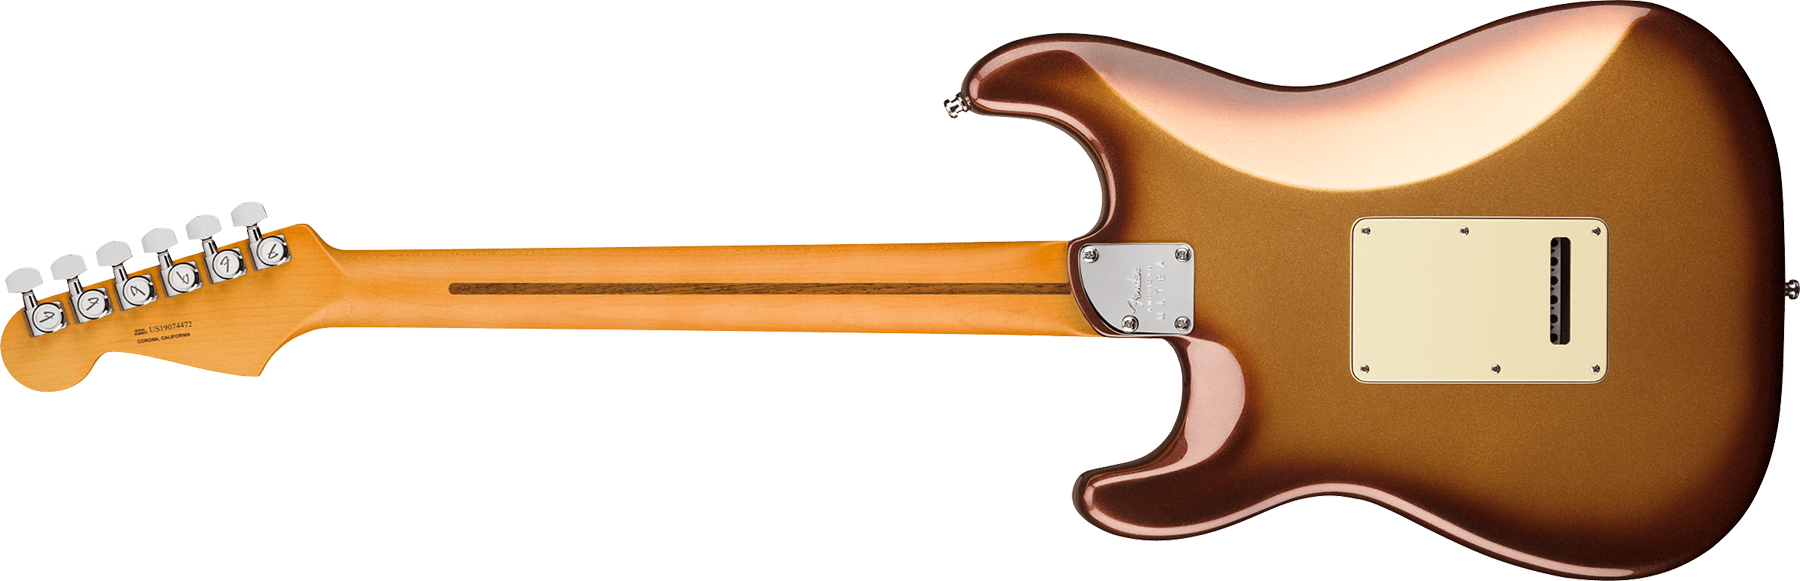 Fender Strat American Ultra 2019 Usa Mn - Mocha Burst - Str shape electric guitar - Variation 2